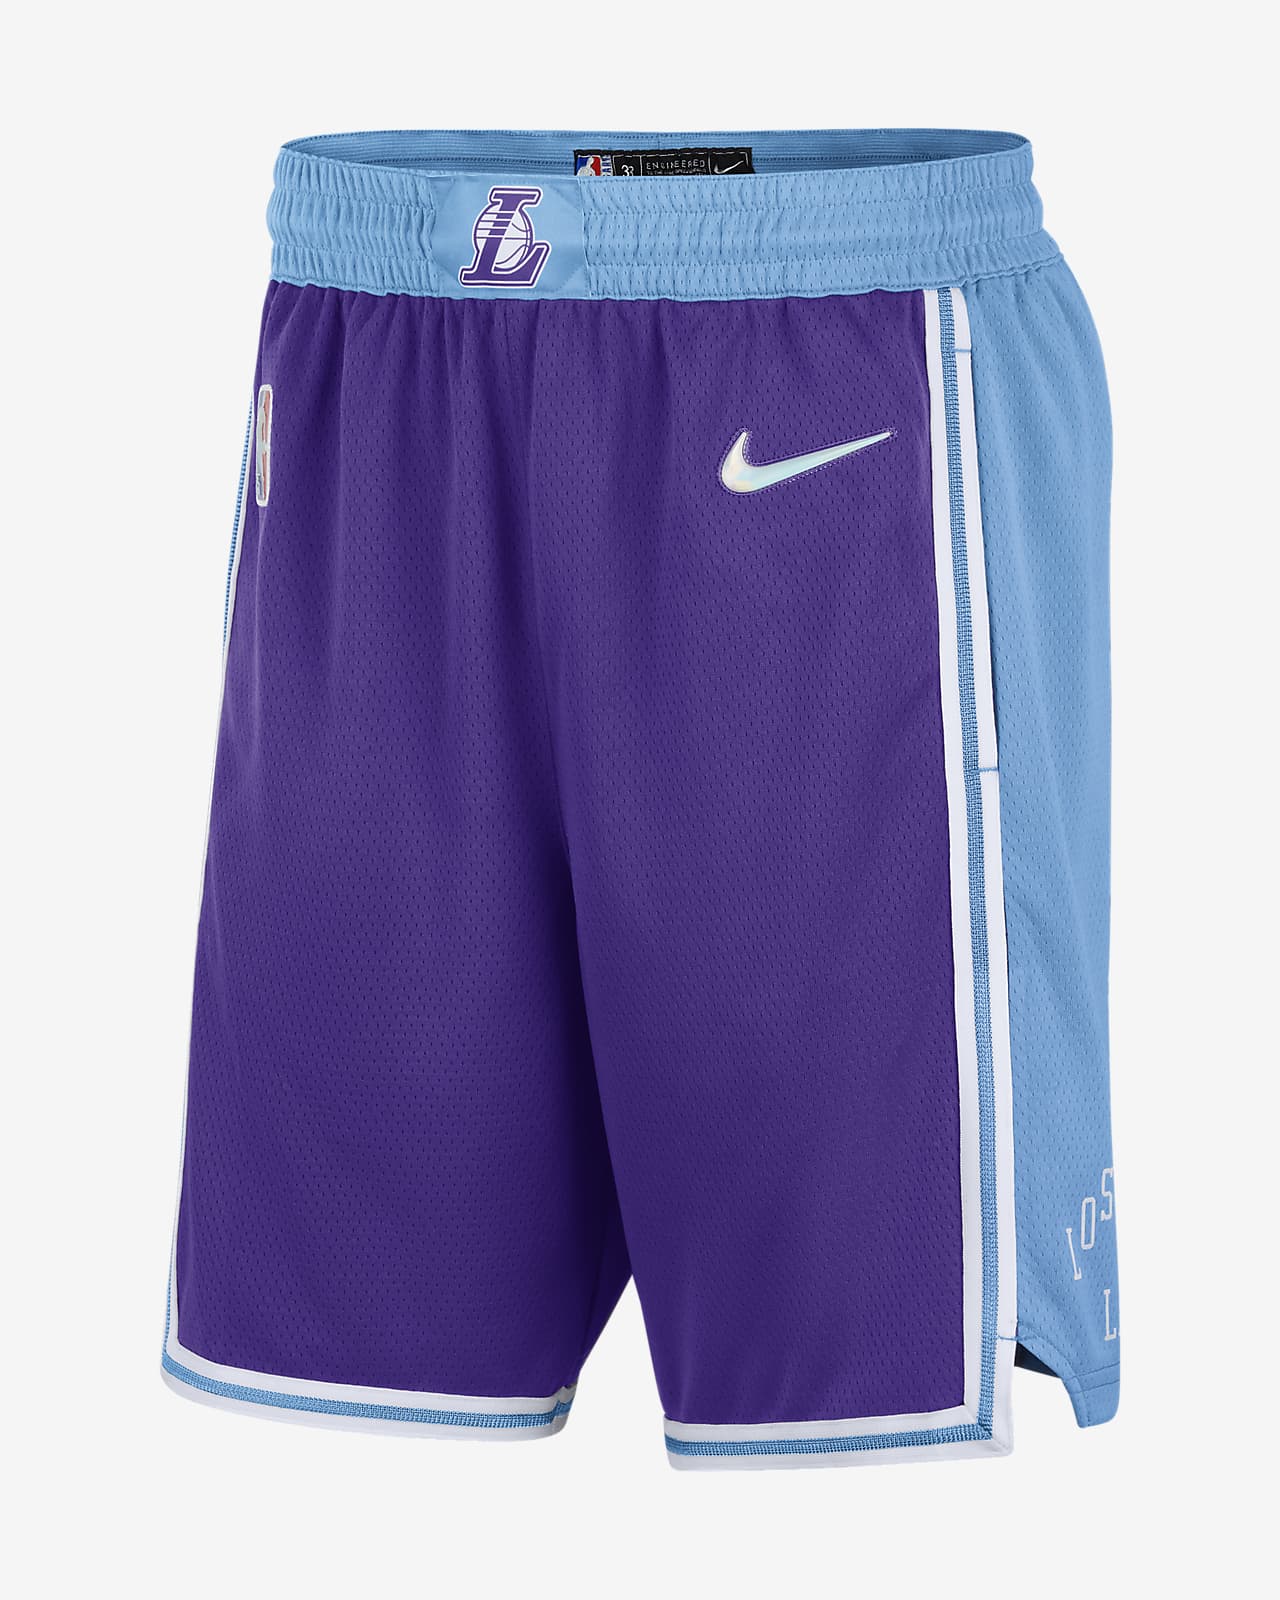 Shorts Los Angeles Lakers City Edition Nike Dri-FIT Swingman NBA - Uomo